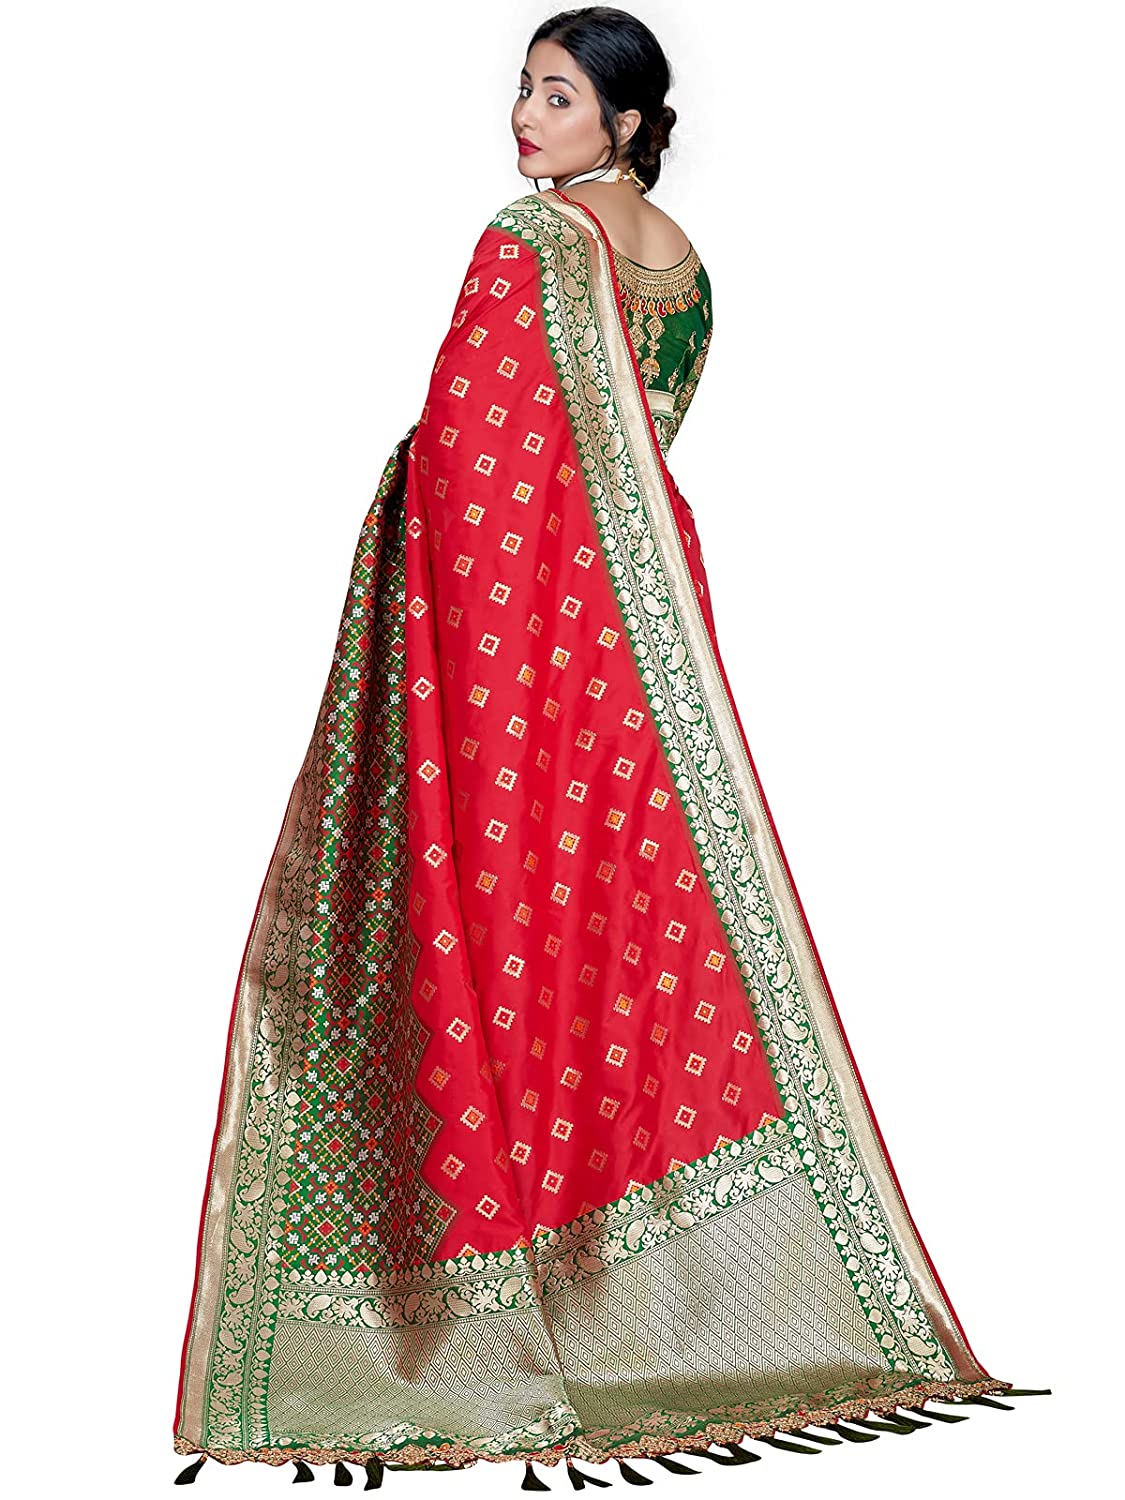 Women's Red Designer Saree Collection - Dwija Fashion